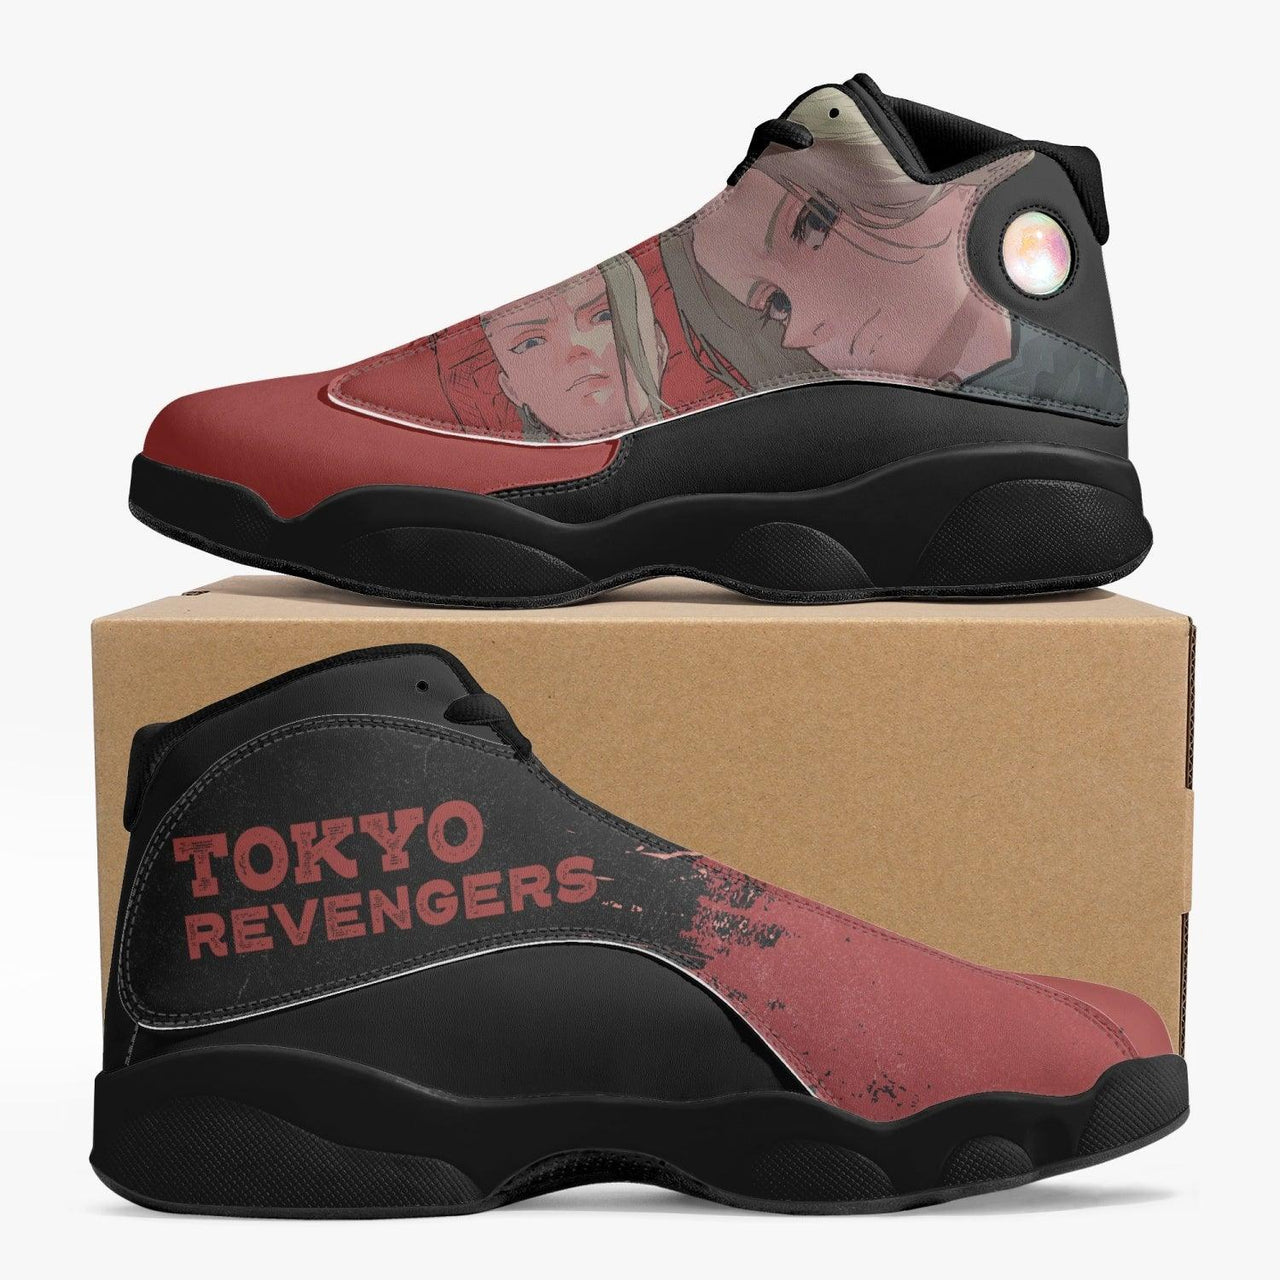 Tokyo Revengers Mikey Earned And Draken Earned JD13 Anime Shoes _ Tokyo Revengers _ Ayuko